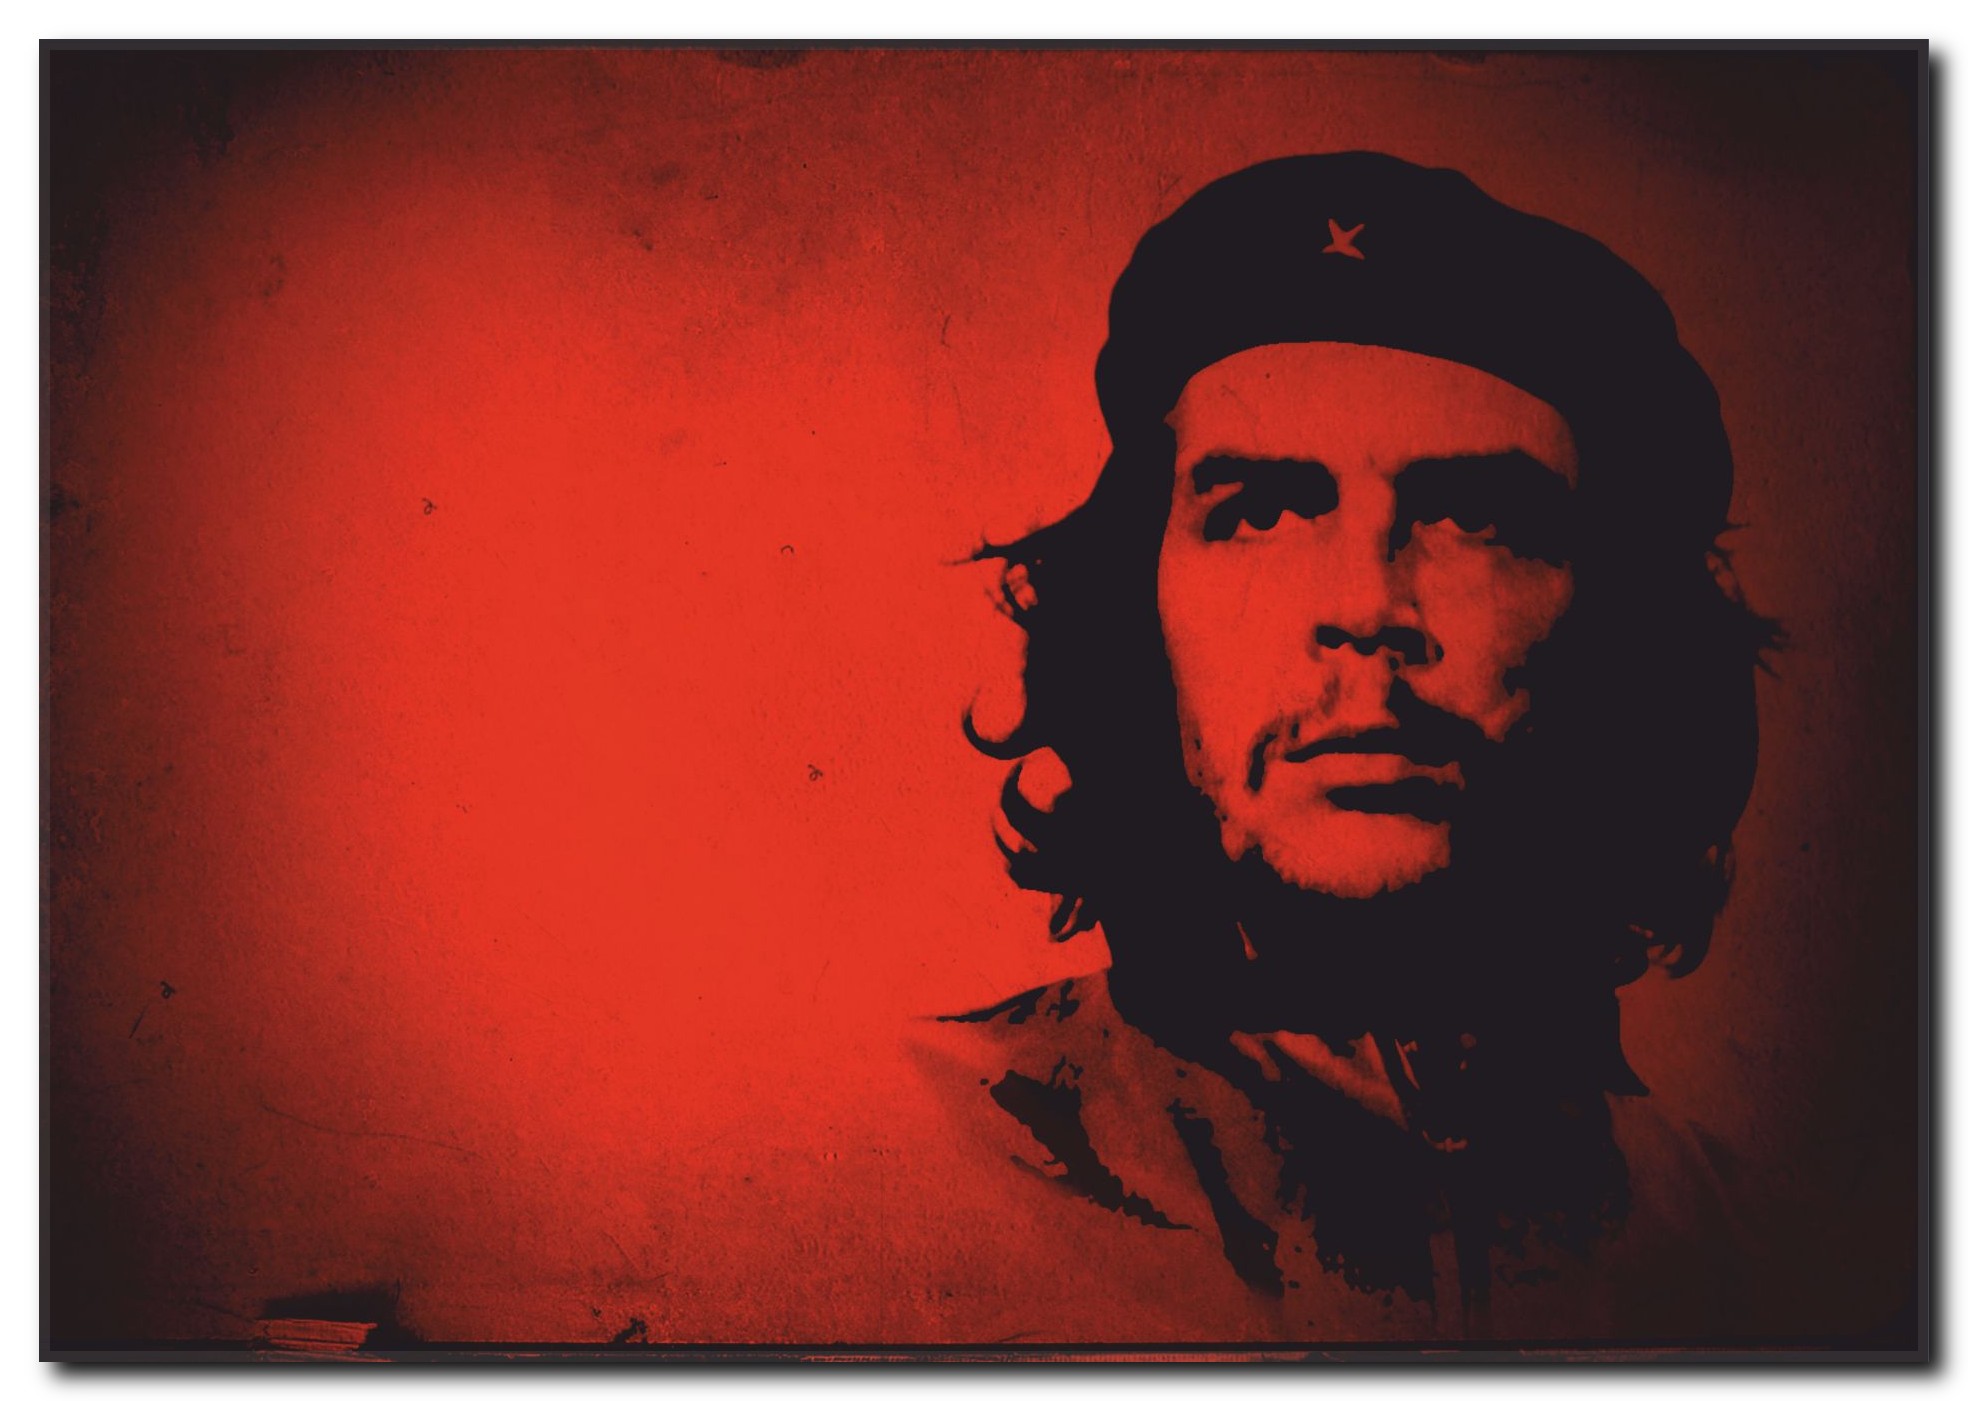 Che b. Команданте че Гевара. Эрнесто че Гевара портрет. Портрет Эрнесто че Гевары. Эрнесто че Гевара революция.